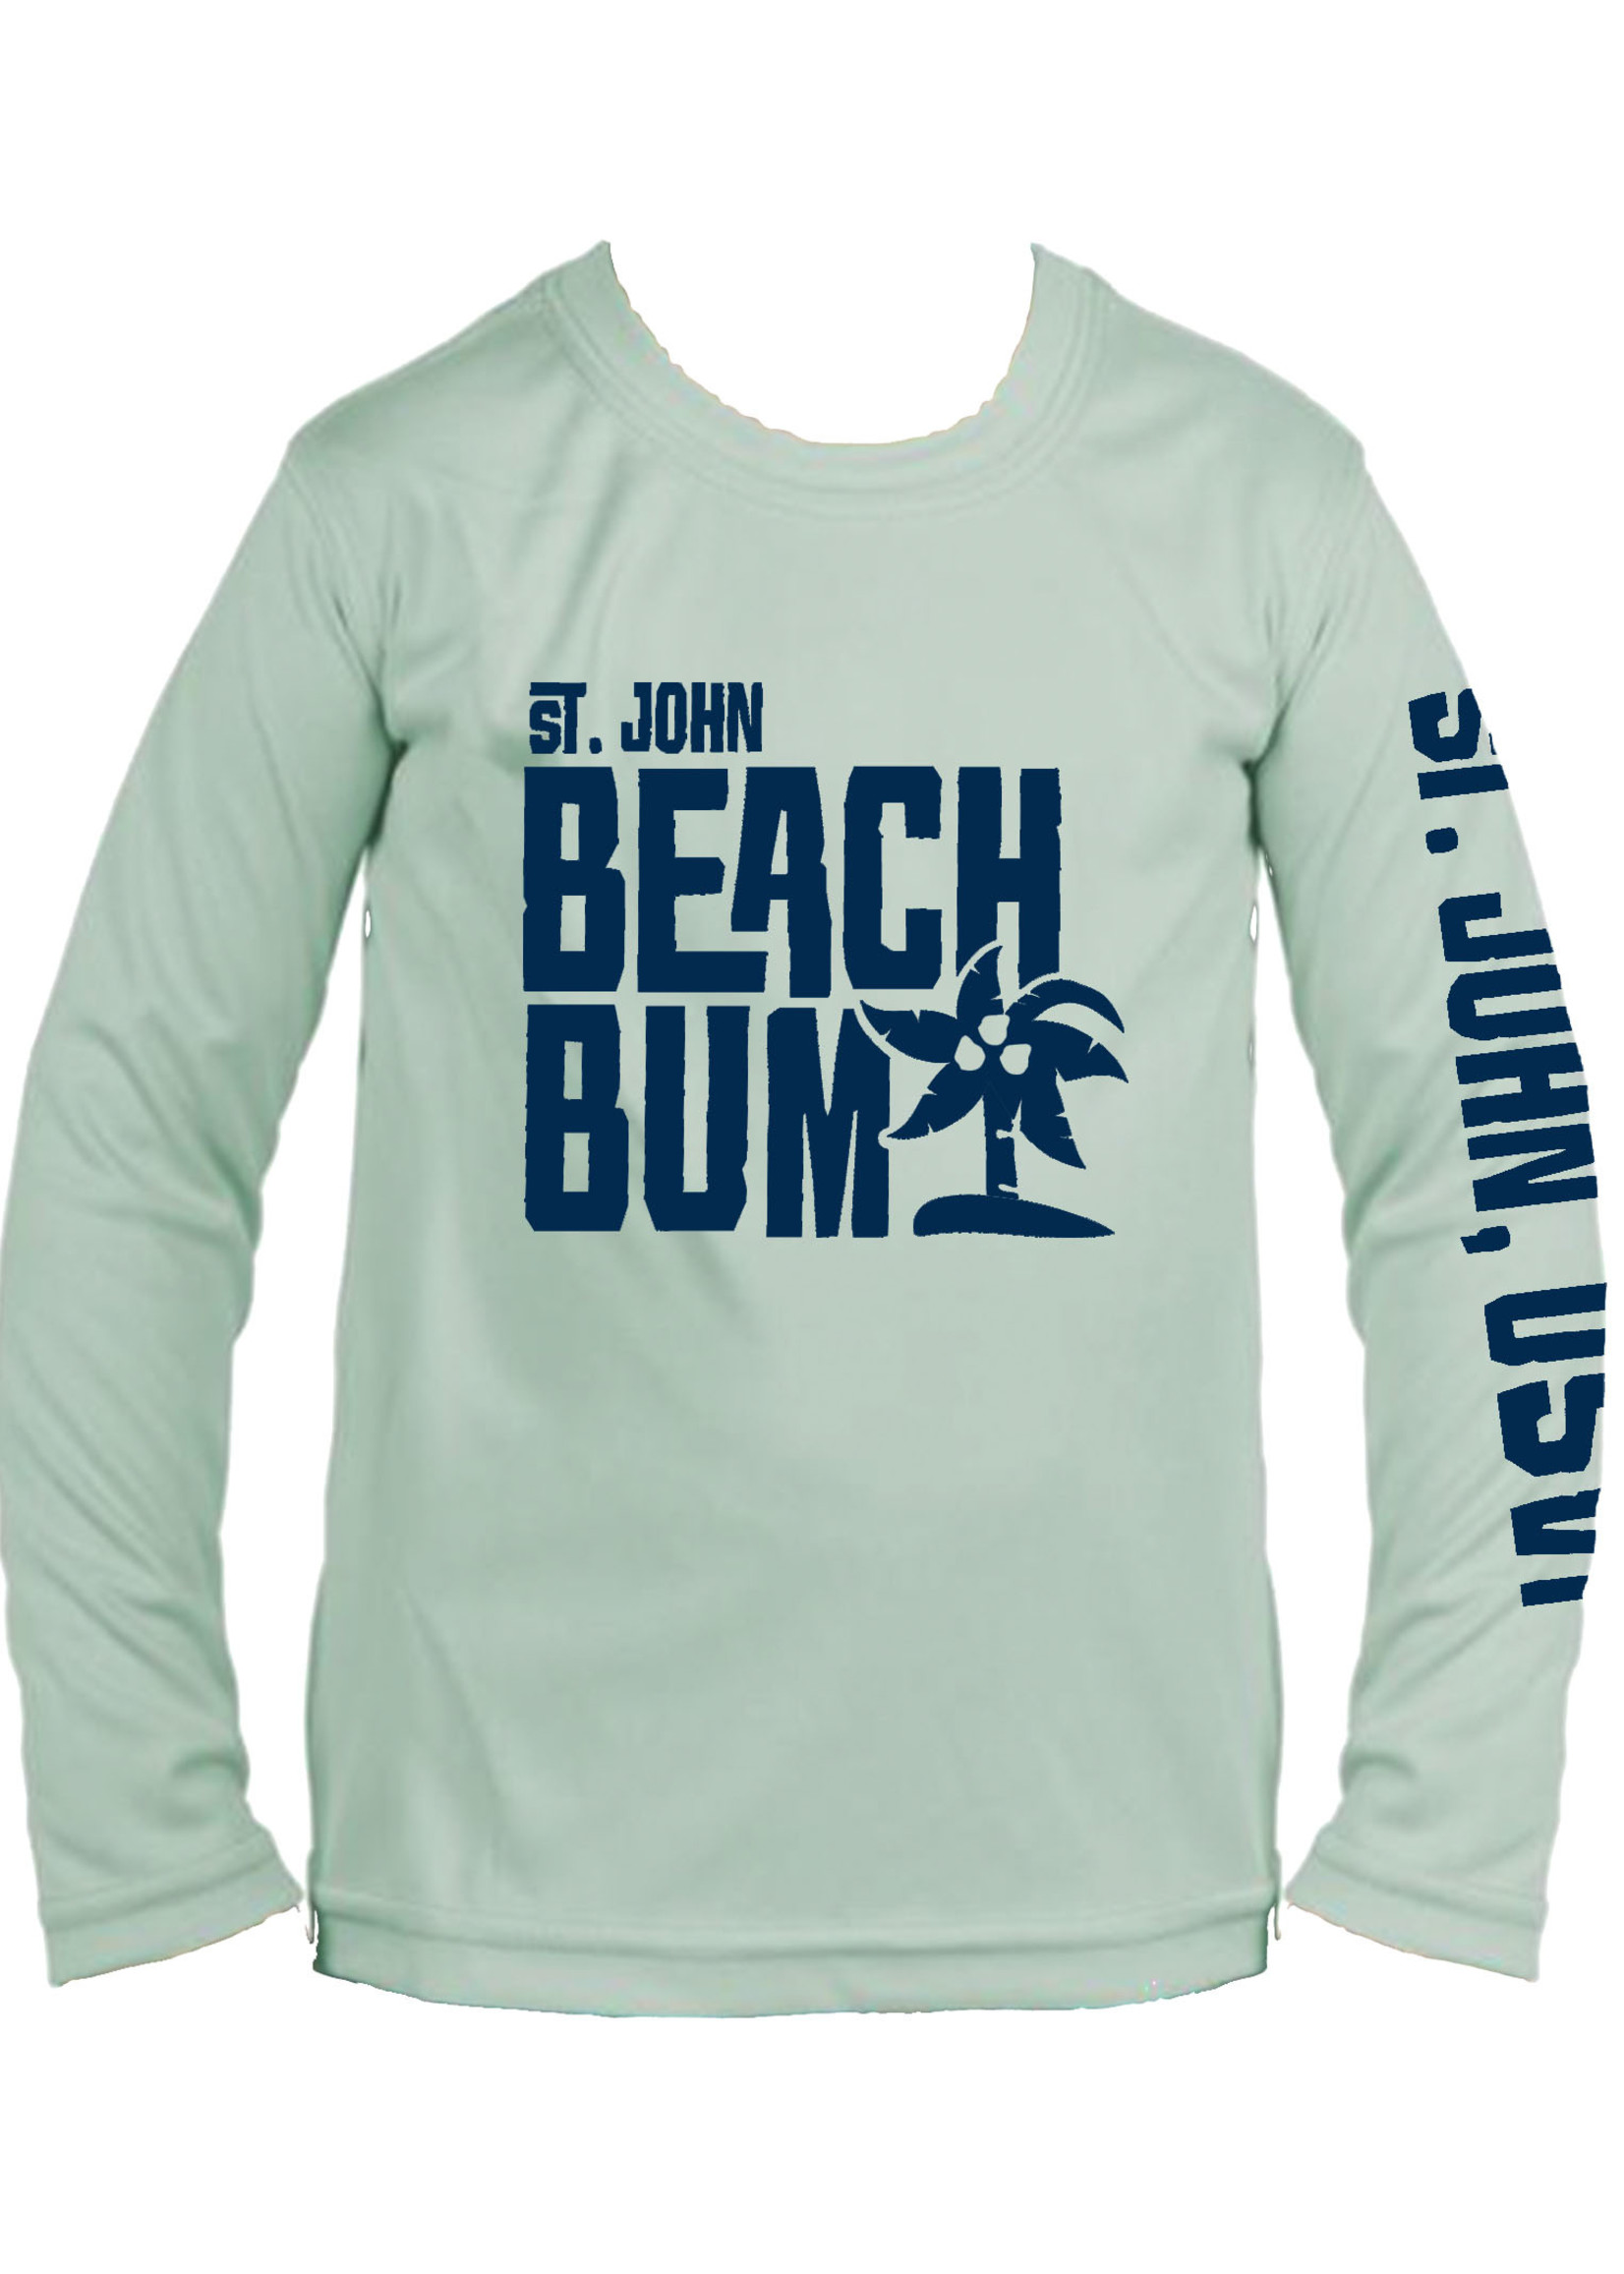 St. John Beach Bum Toddler Rash Guard - Big Bum